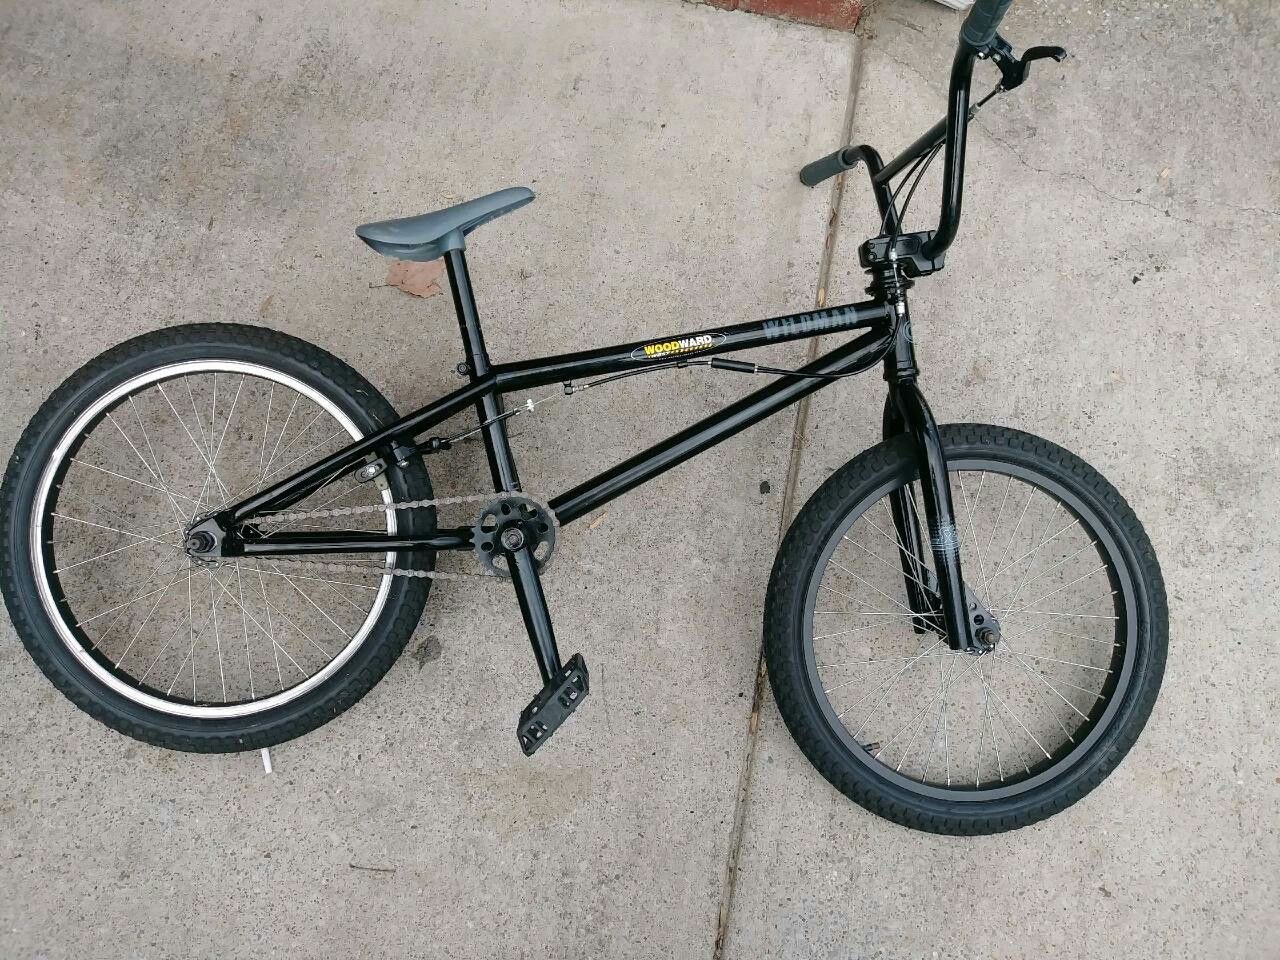 WildMan Pro-BMX bike